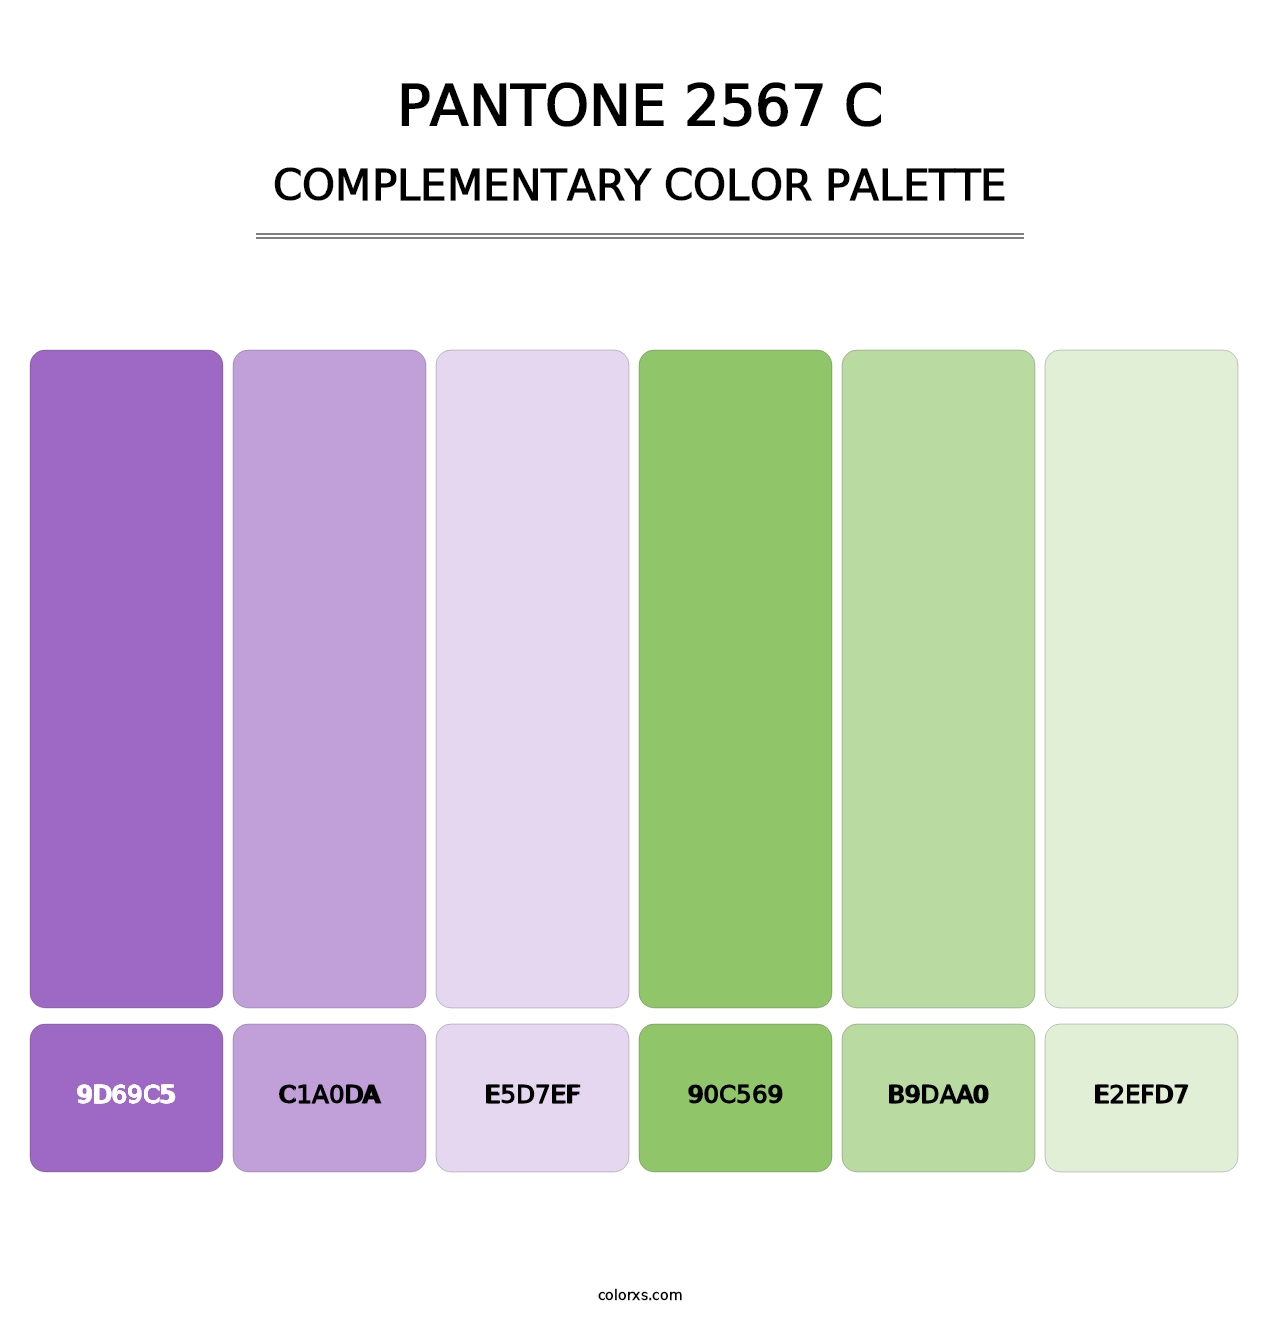 PANTONE 2567 C - Complementary Color Palette